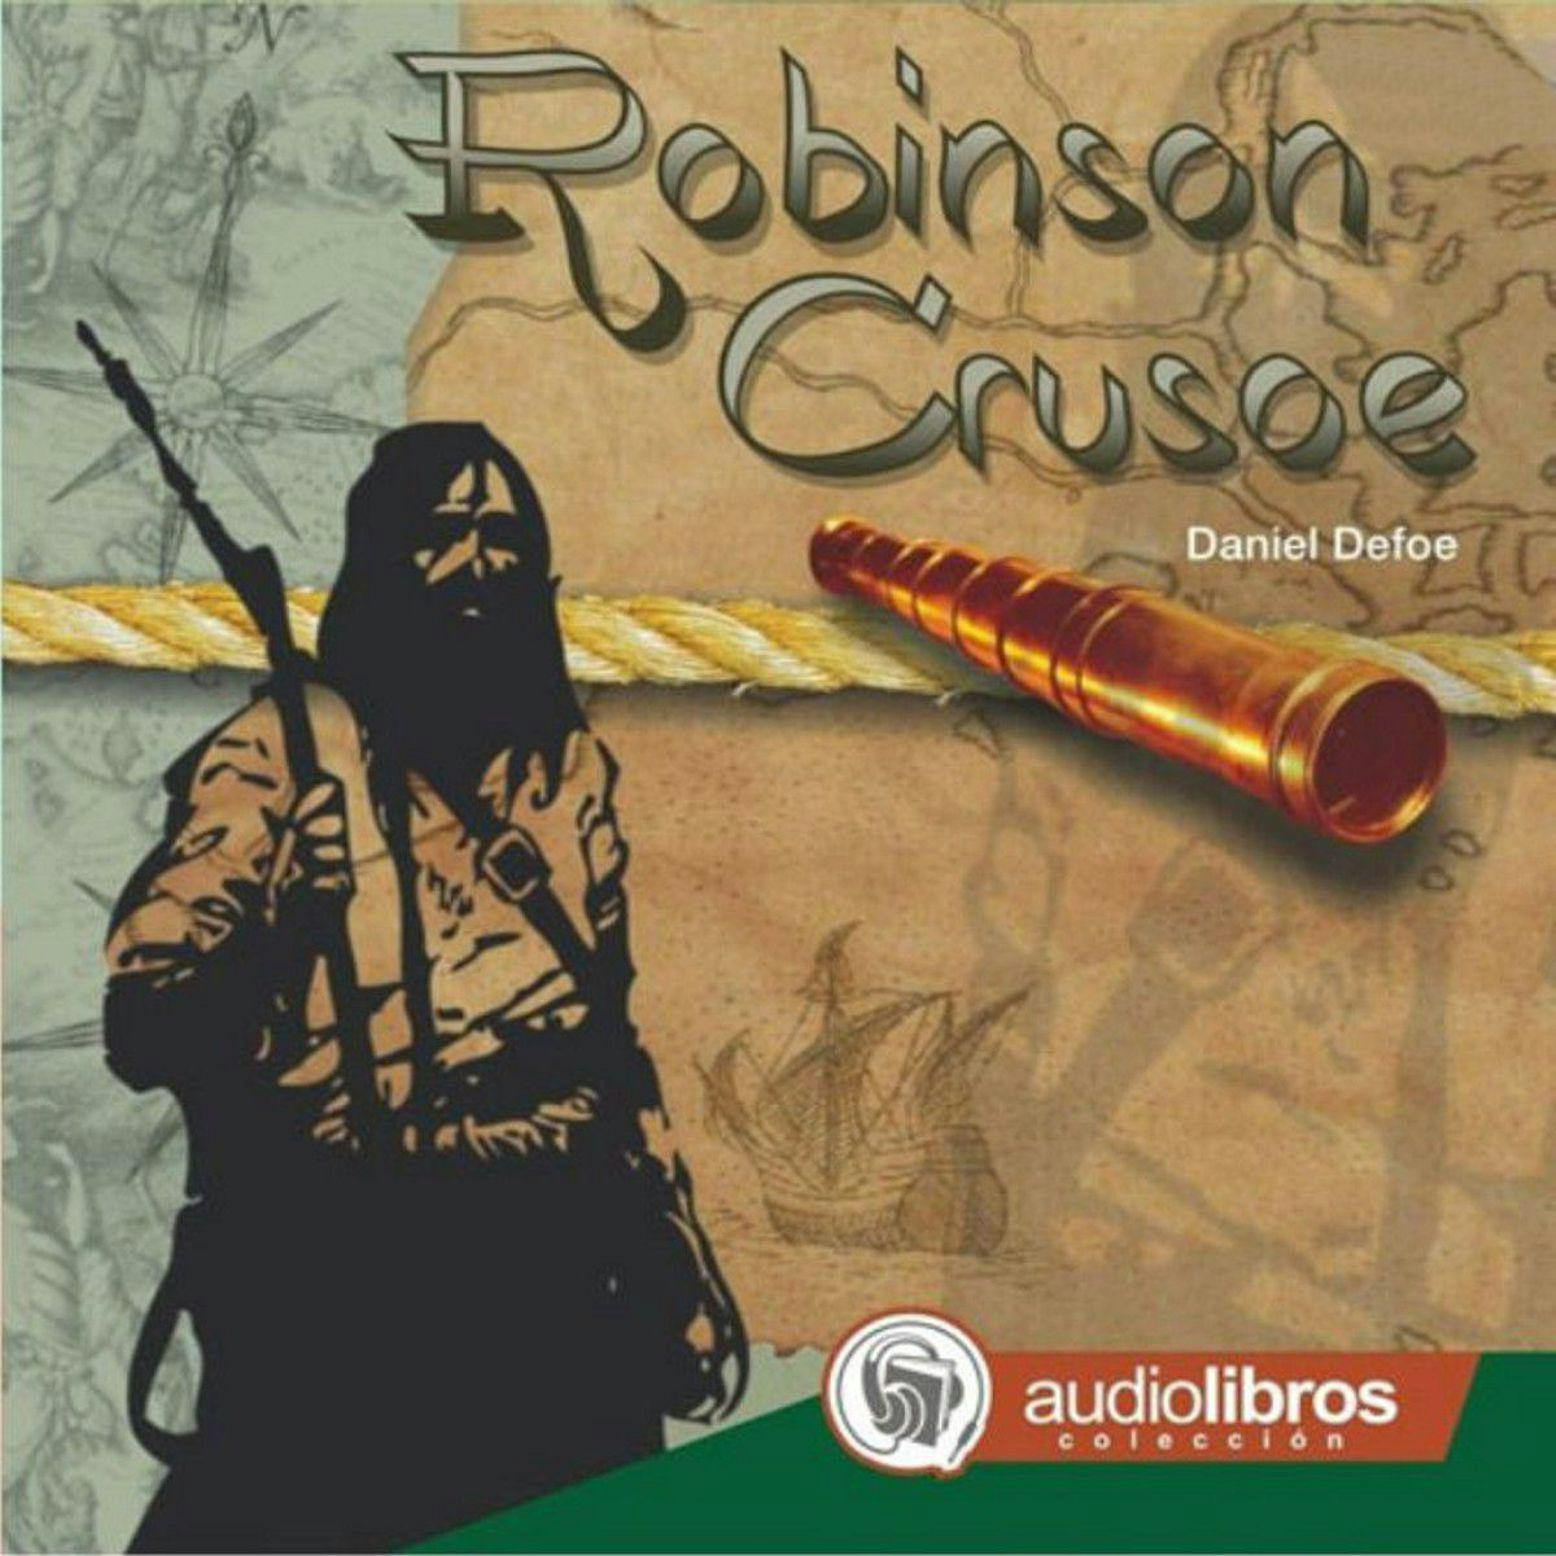 Robinson Crusoe - undefined